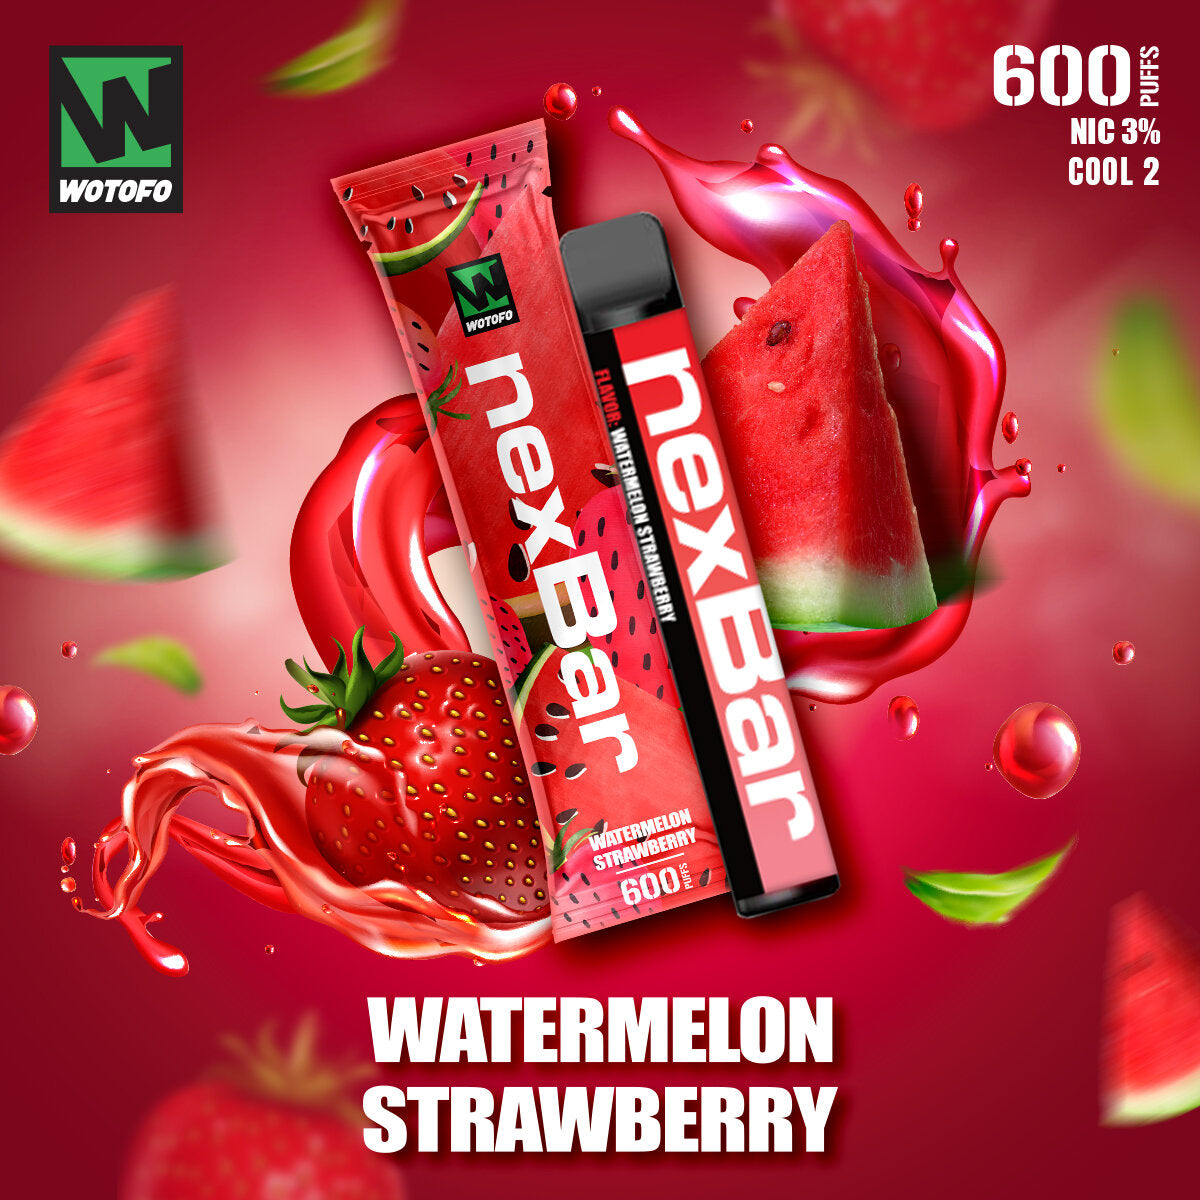 Next Bar - Watermelon Strawberry